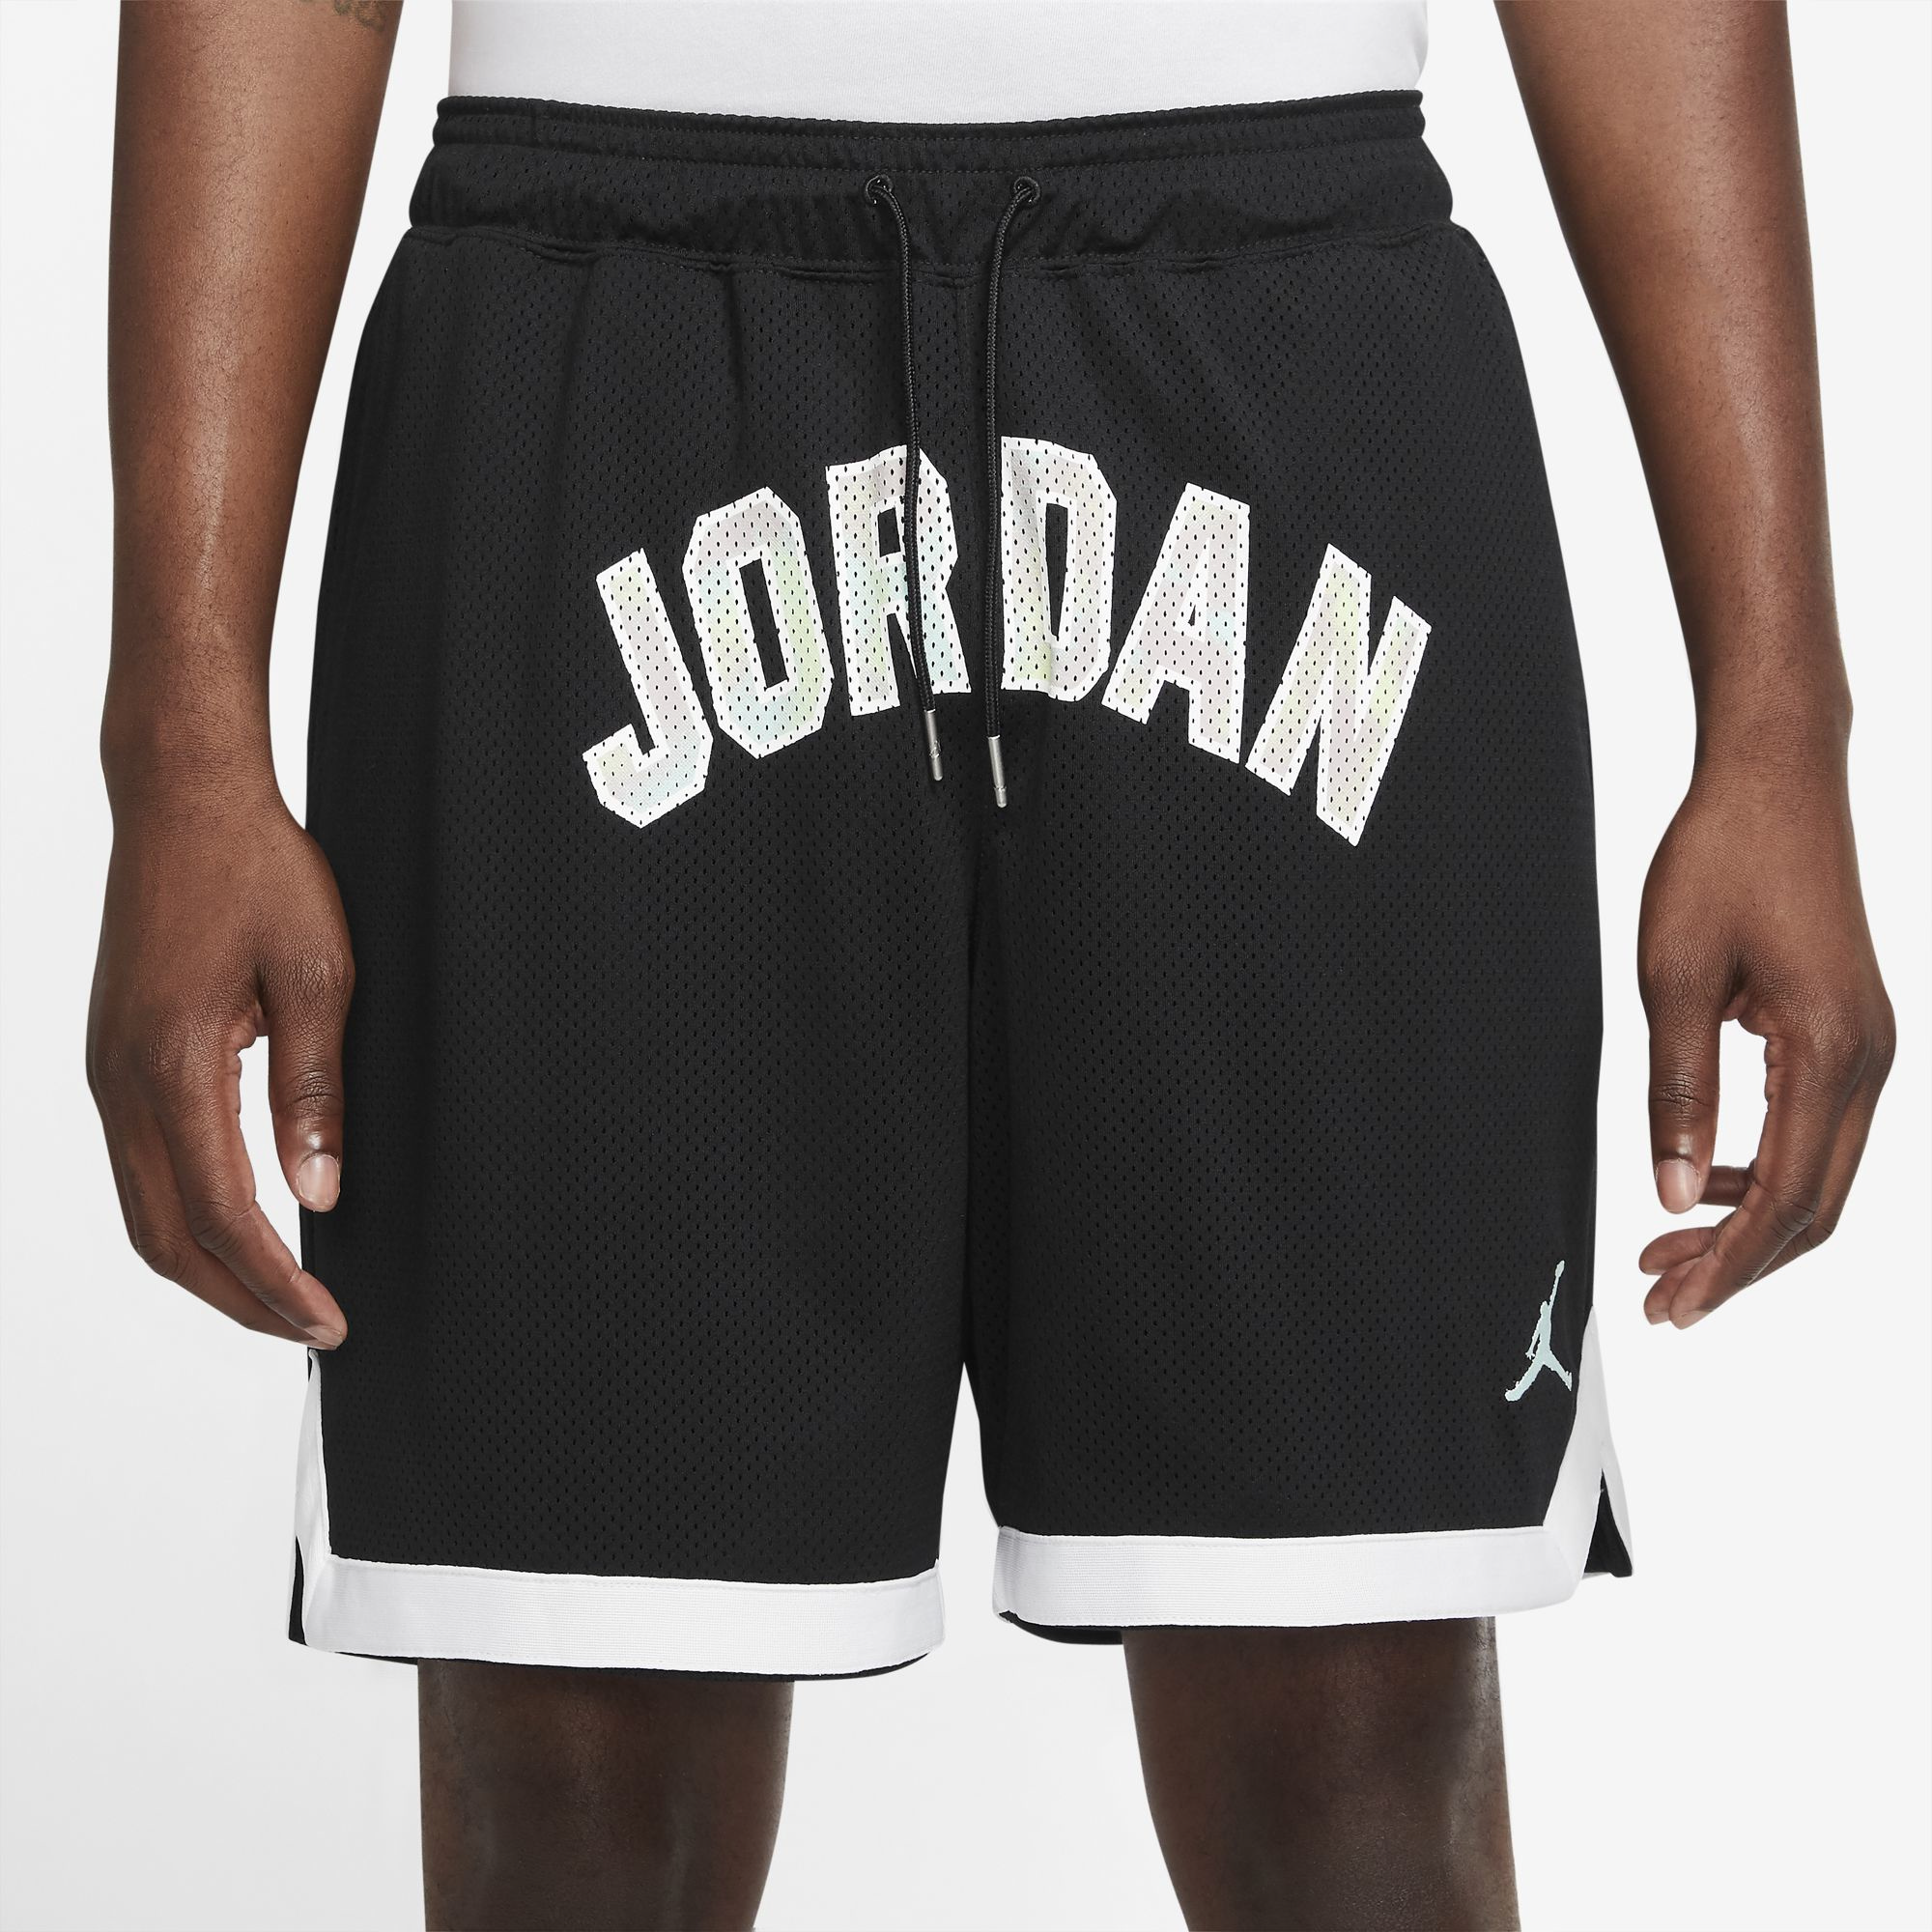 jordan shorts foot locker